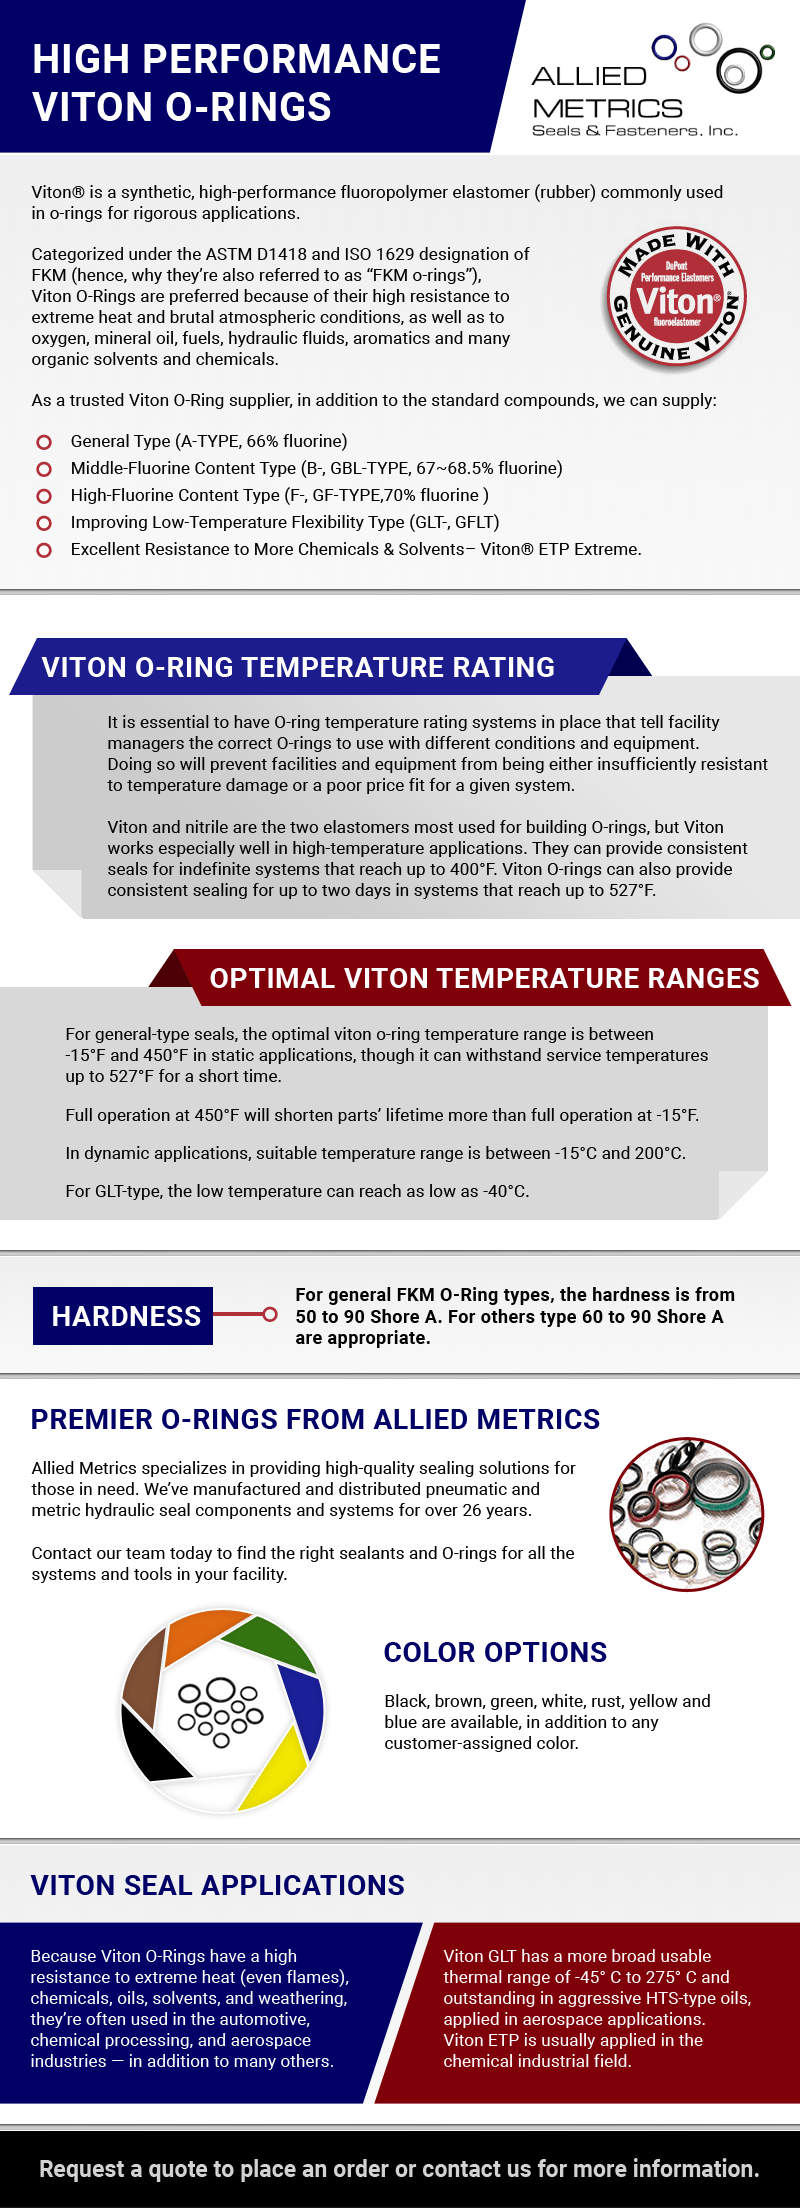 Viton O-Rings  Allied Metrics Seals & Fasteners, Inc